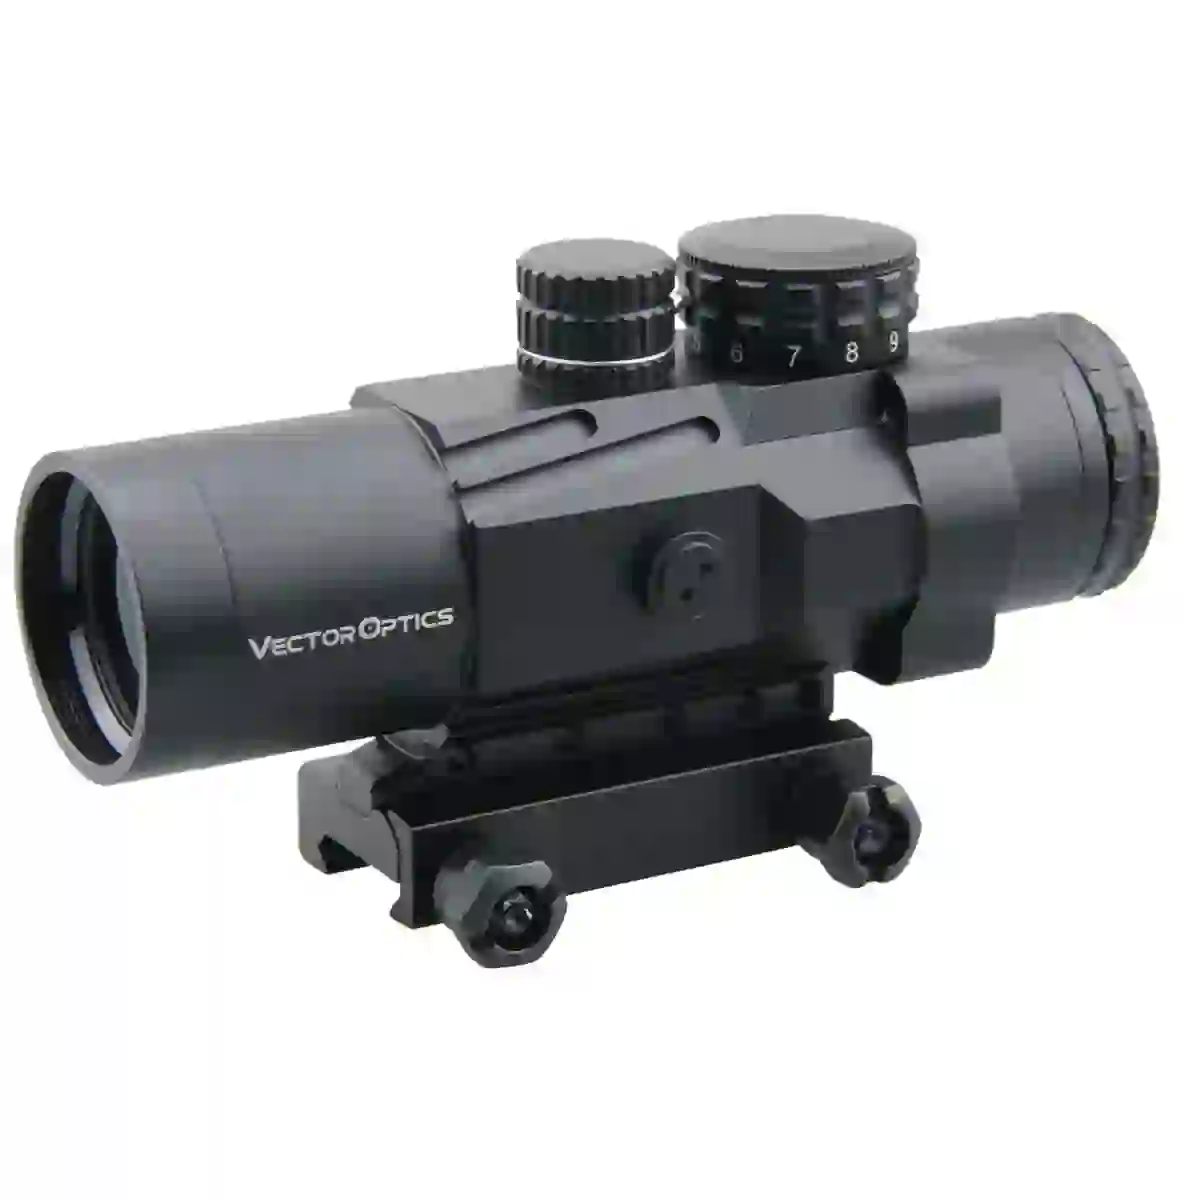 Calypos 3x32SFP Prism Scope Riflescope-Rifle Scope & Red Dot Sight 